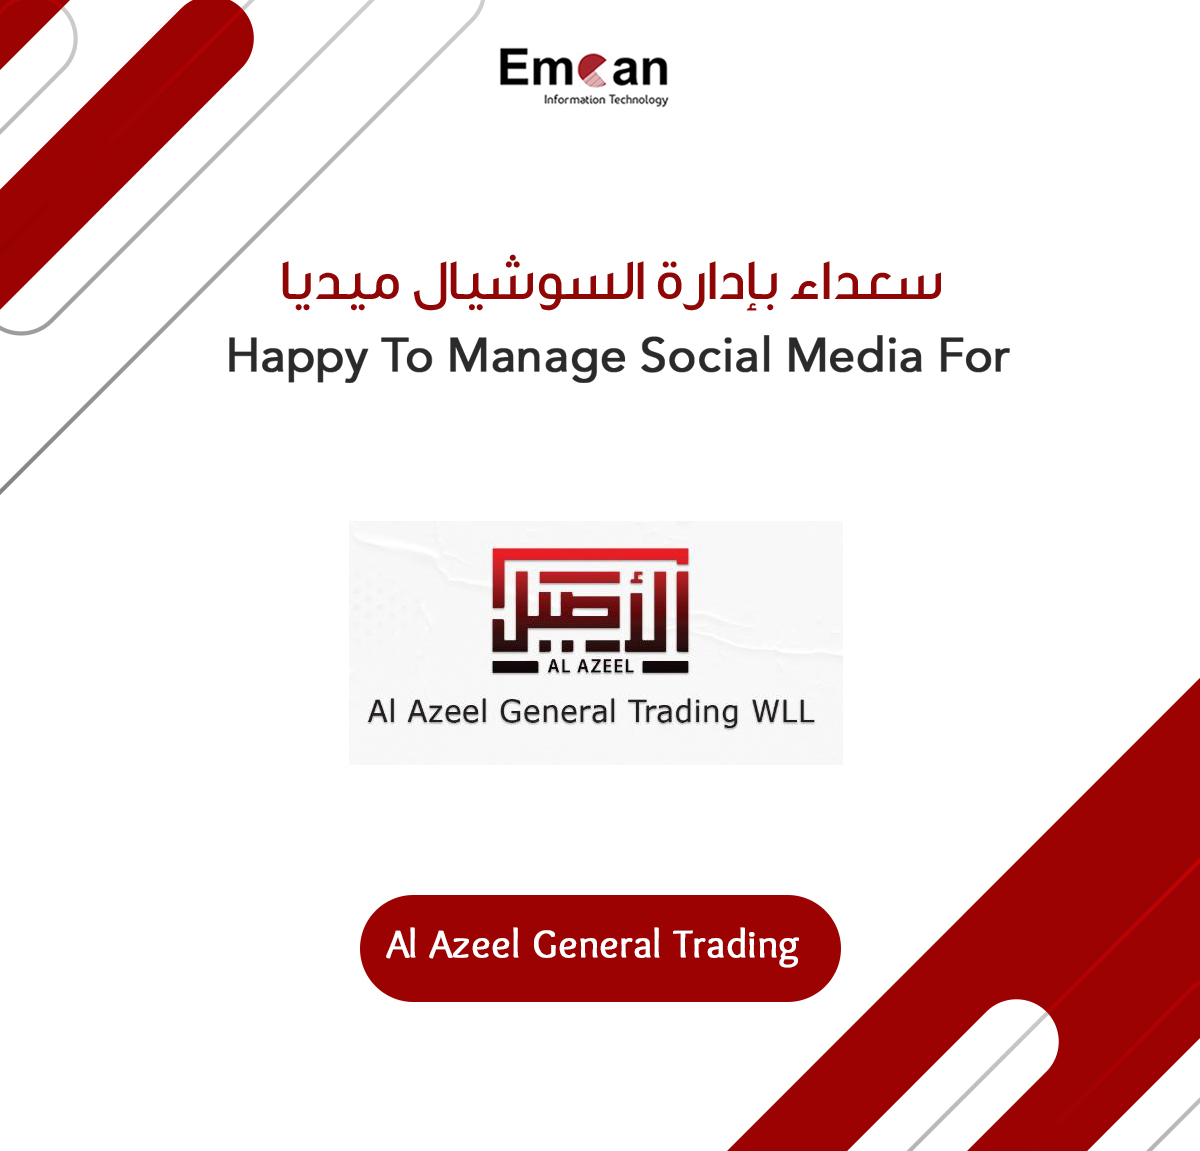 Al Azeel General Trading